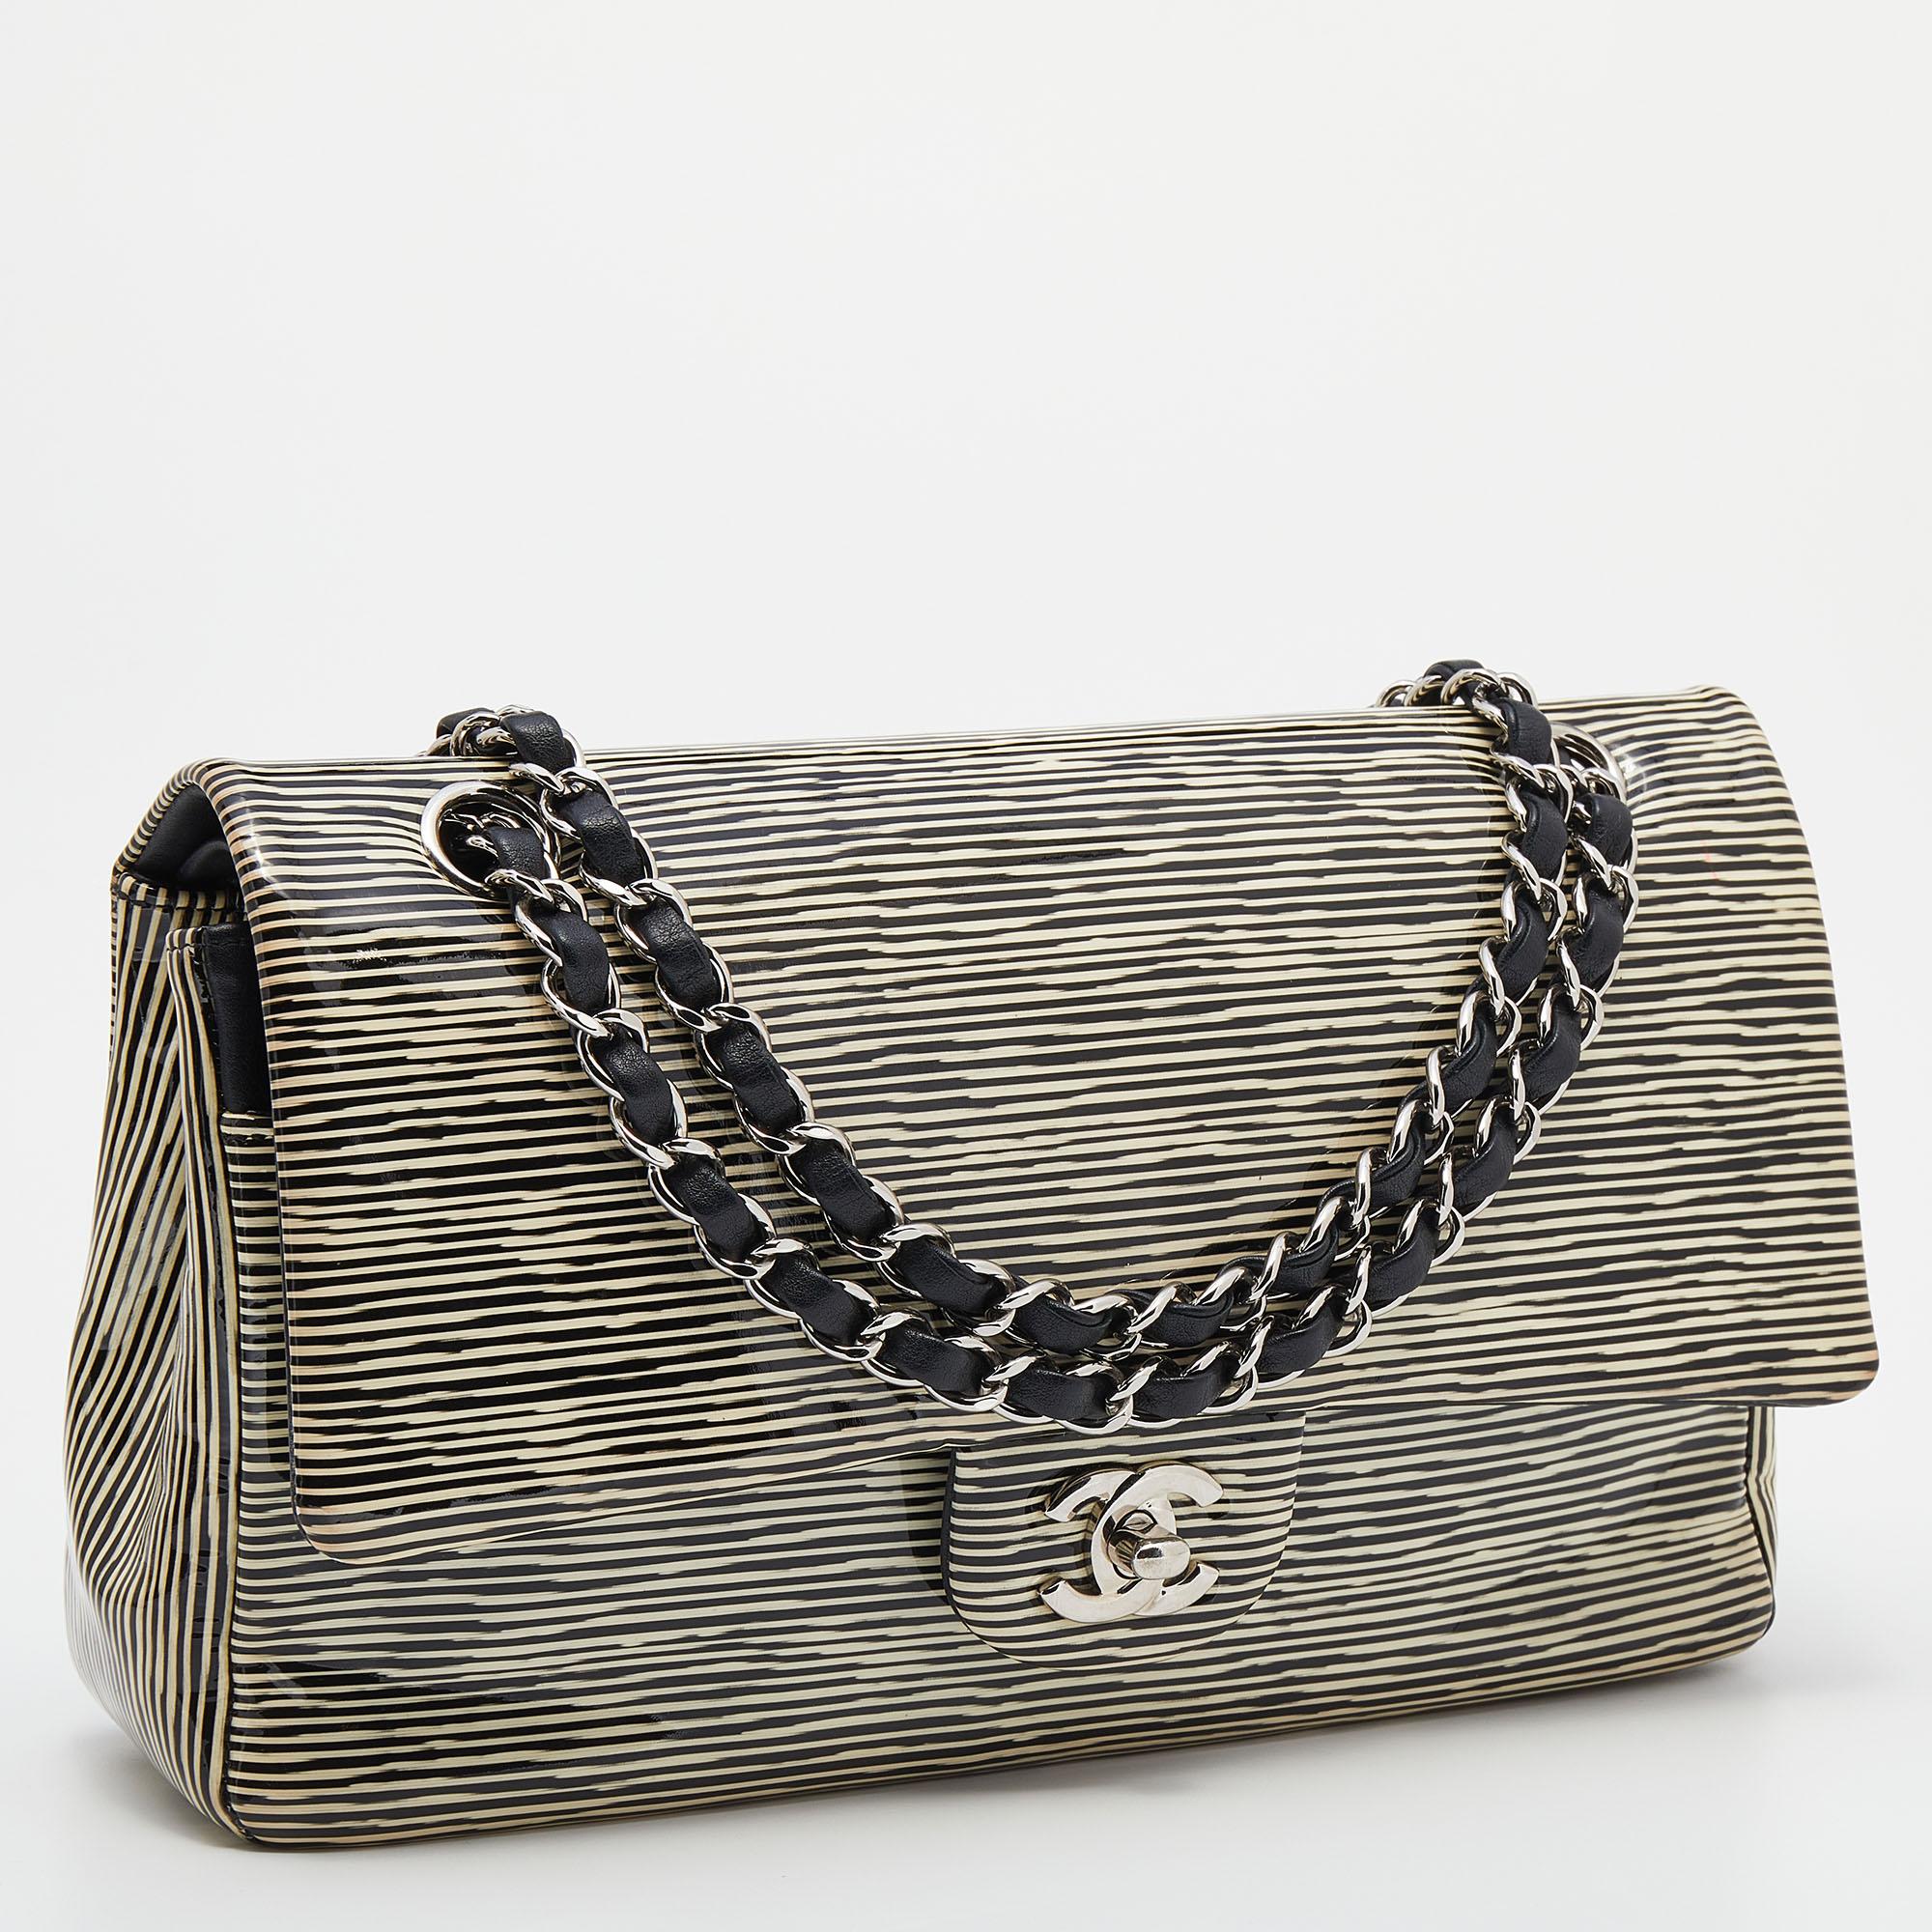 Women's Chanel Black/White Striped Patent Leather Medium Classic Double Flap Bag